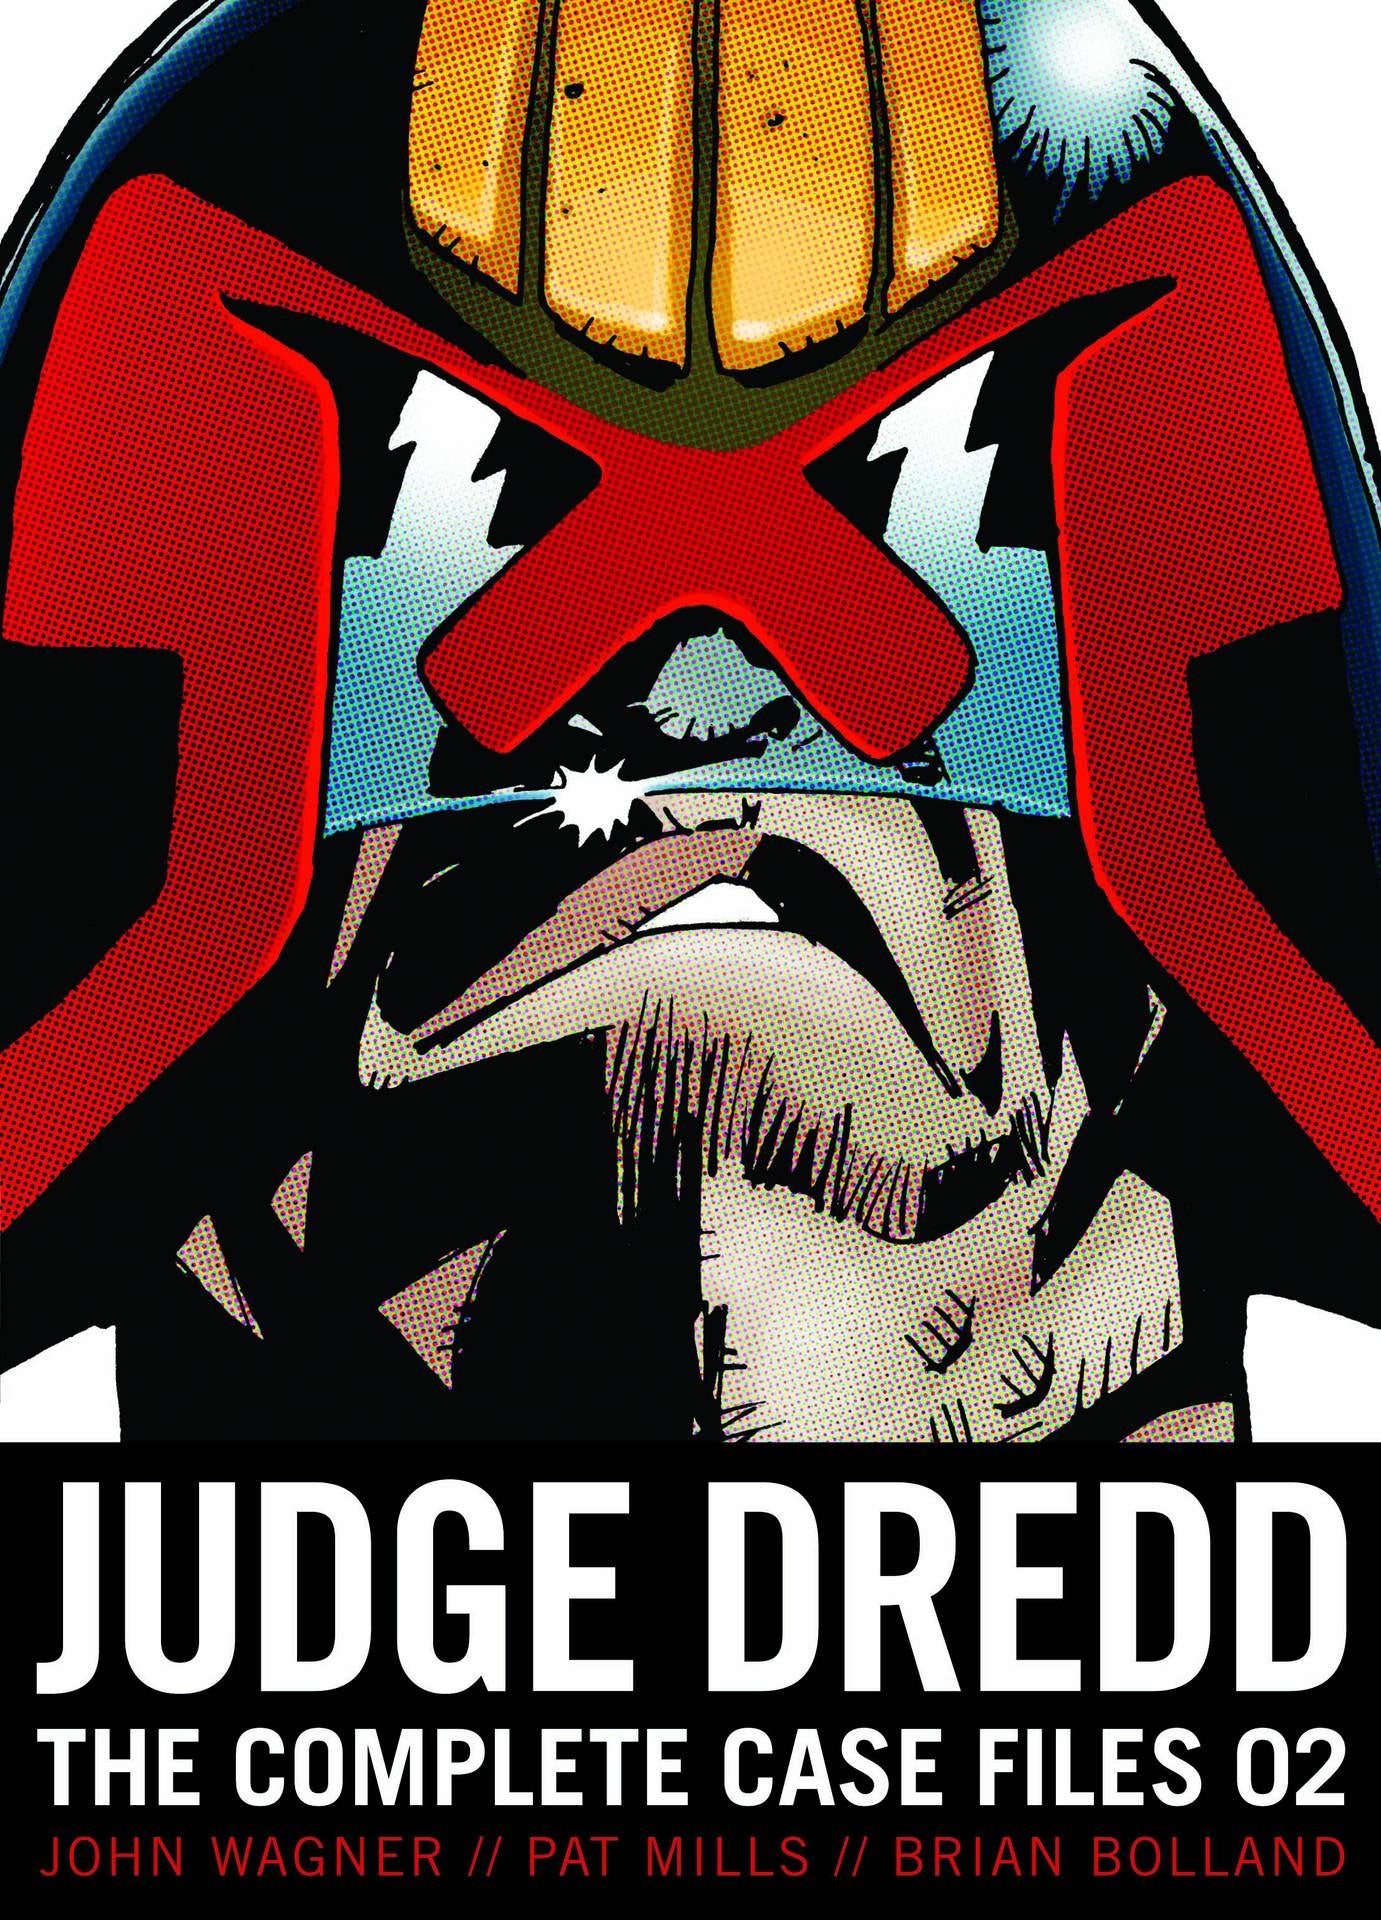 JUDGE DREDD COMPLETE CASE FILES 02